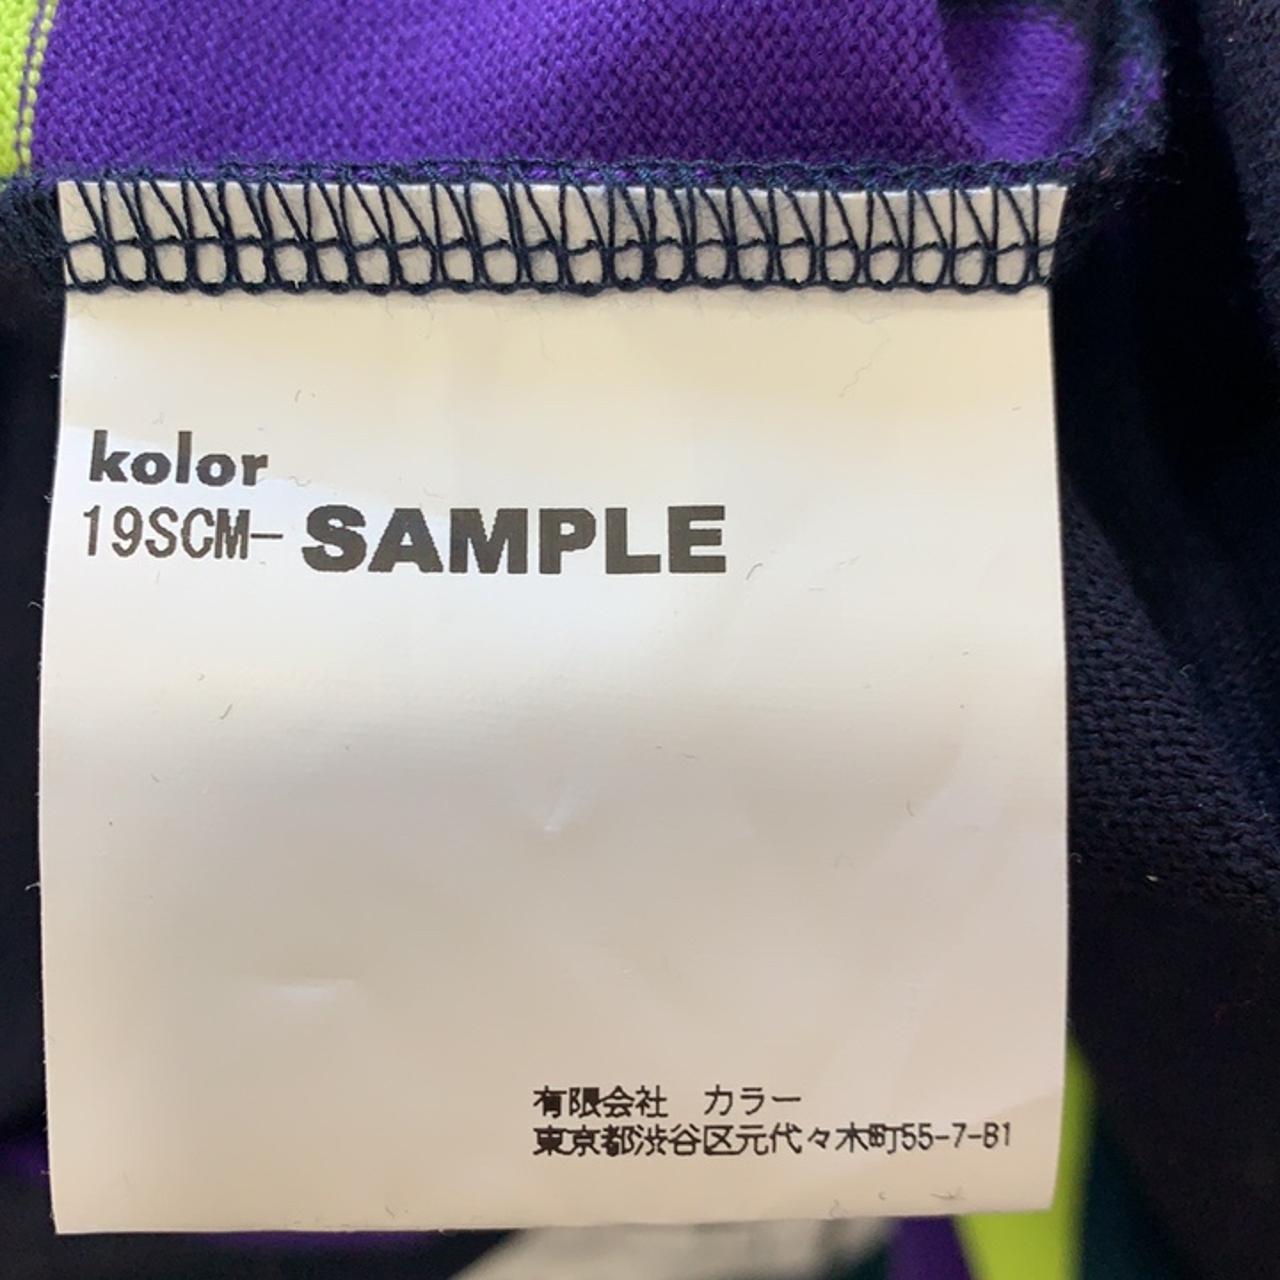 Product Image 2 - Rare “SAMPLE” KOLOR japan tee

One